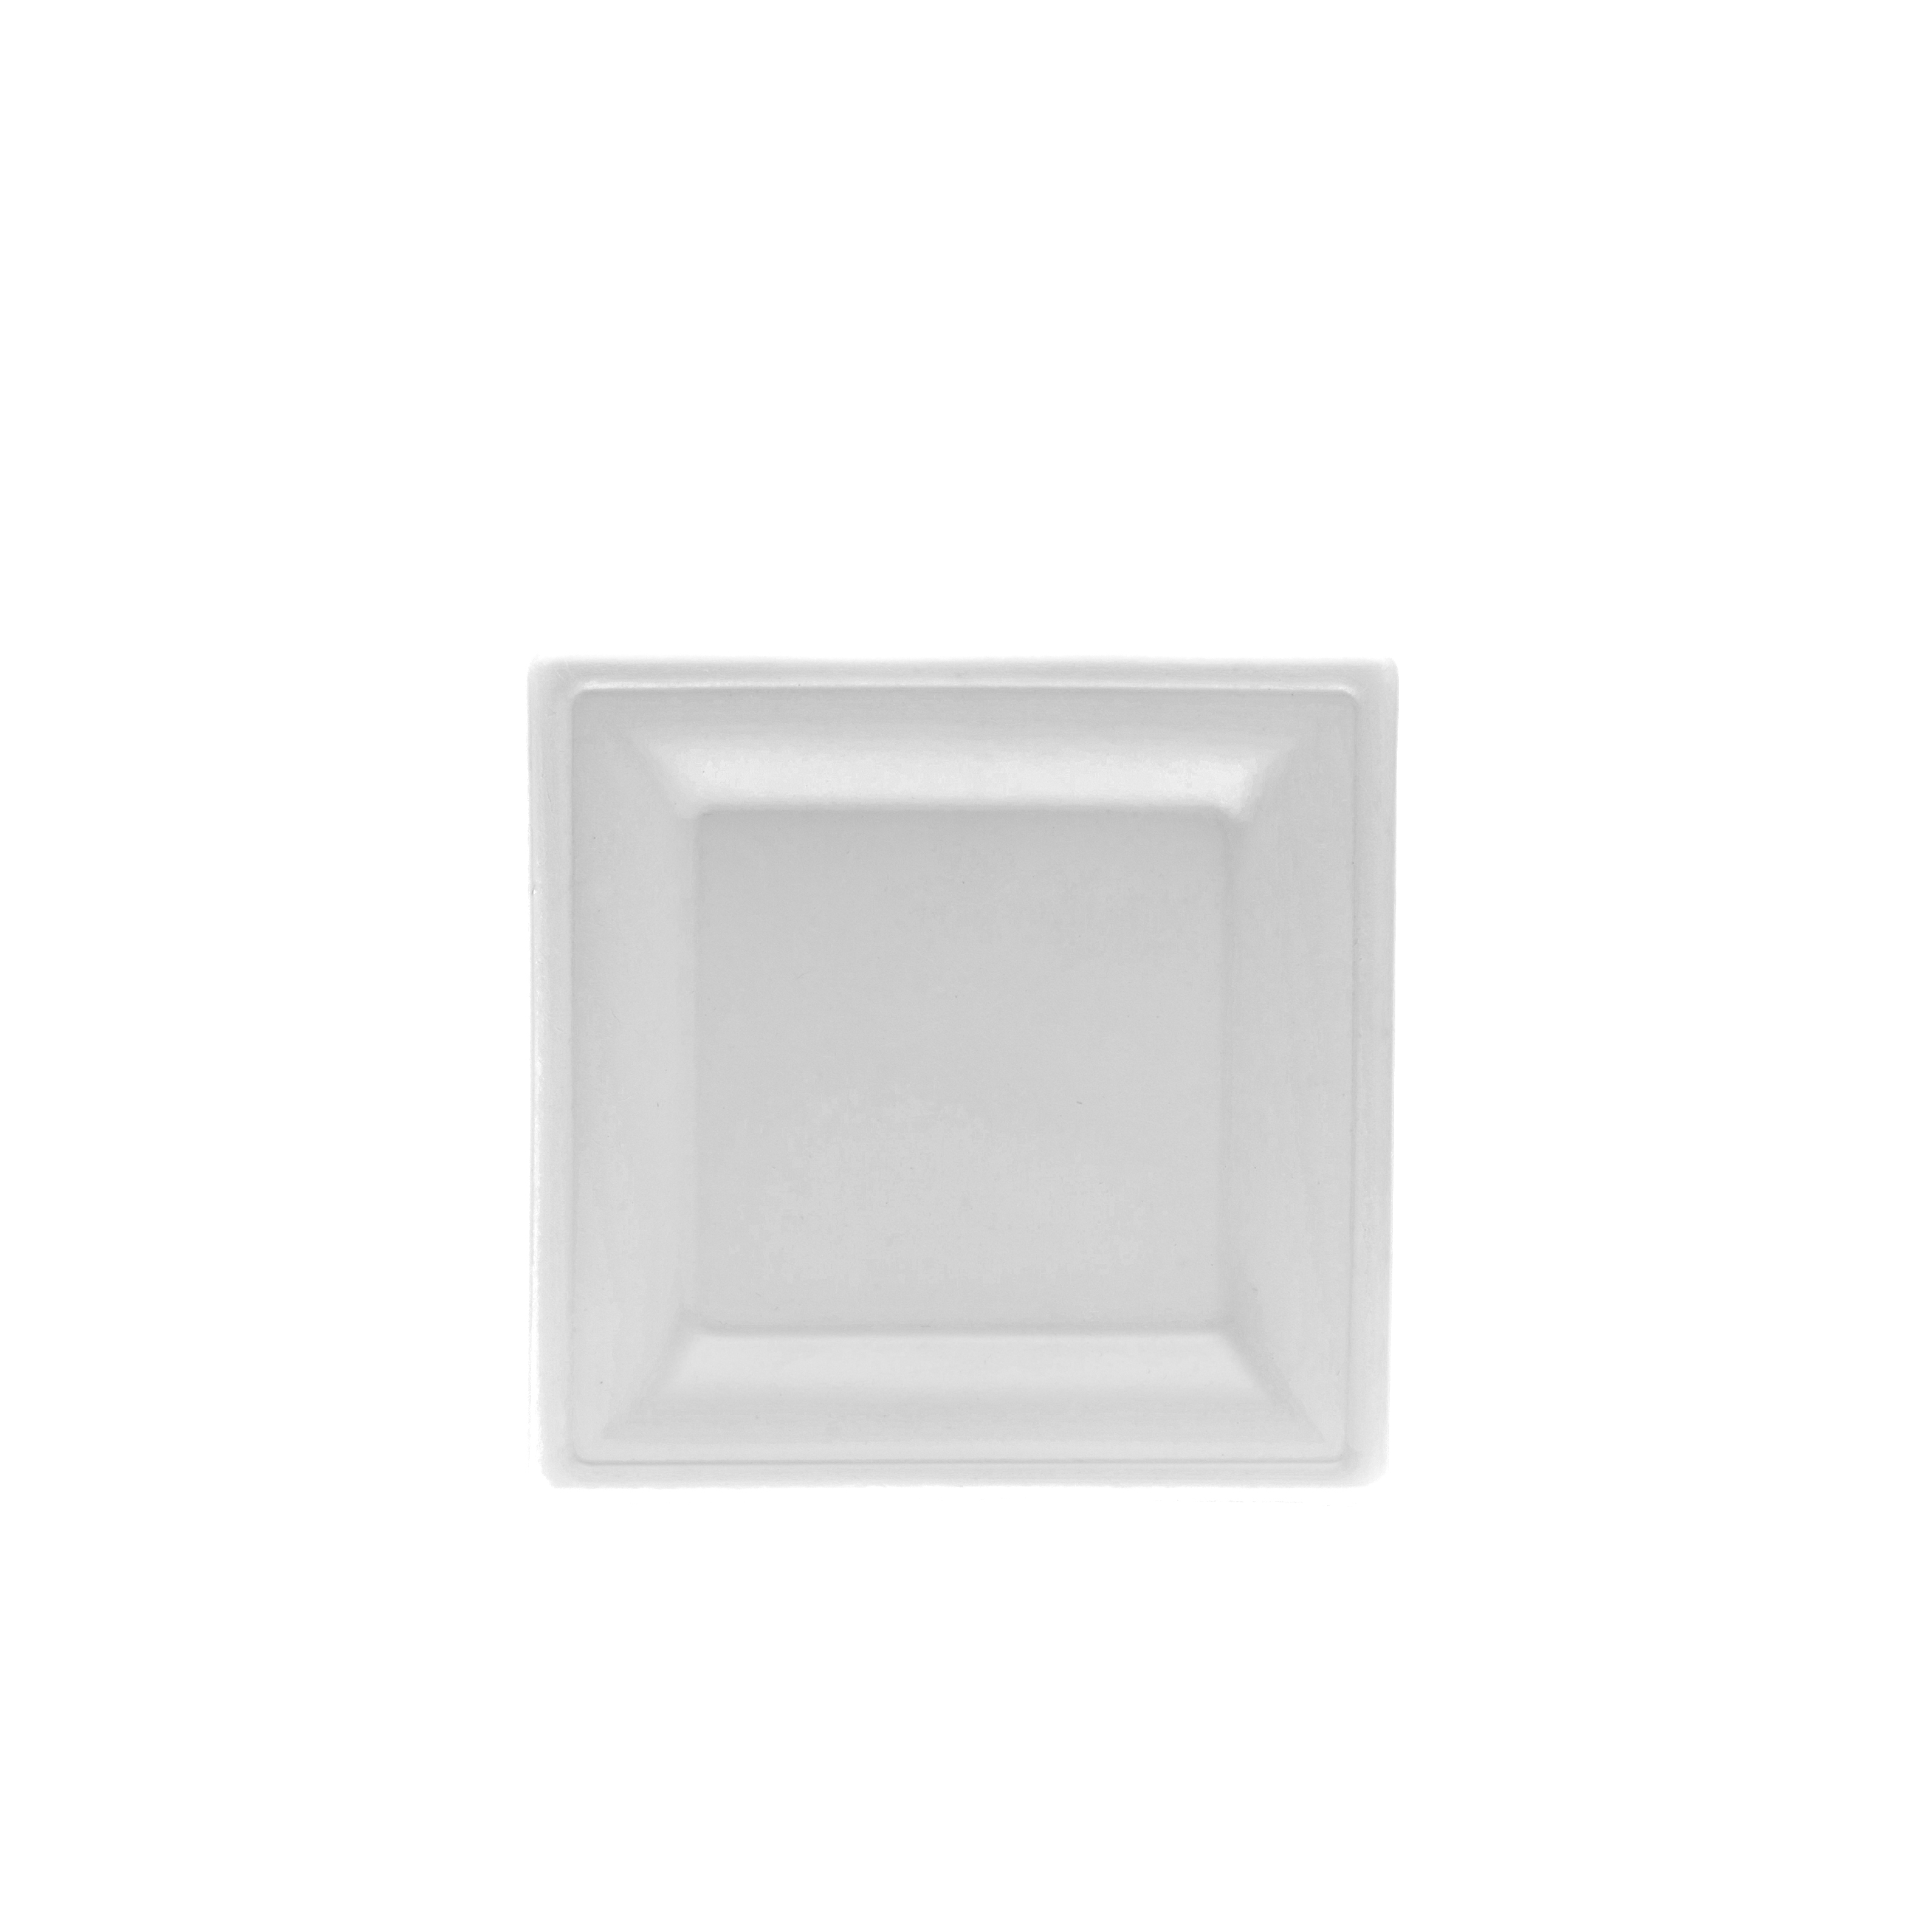 6 inch square plate,Square Plate